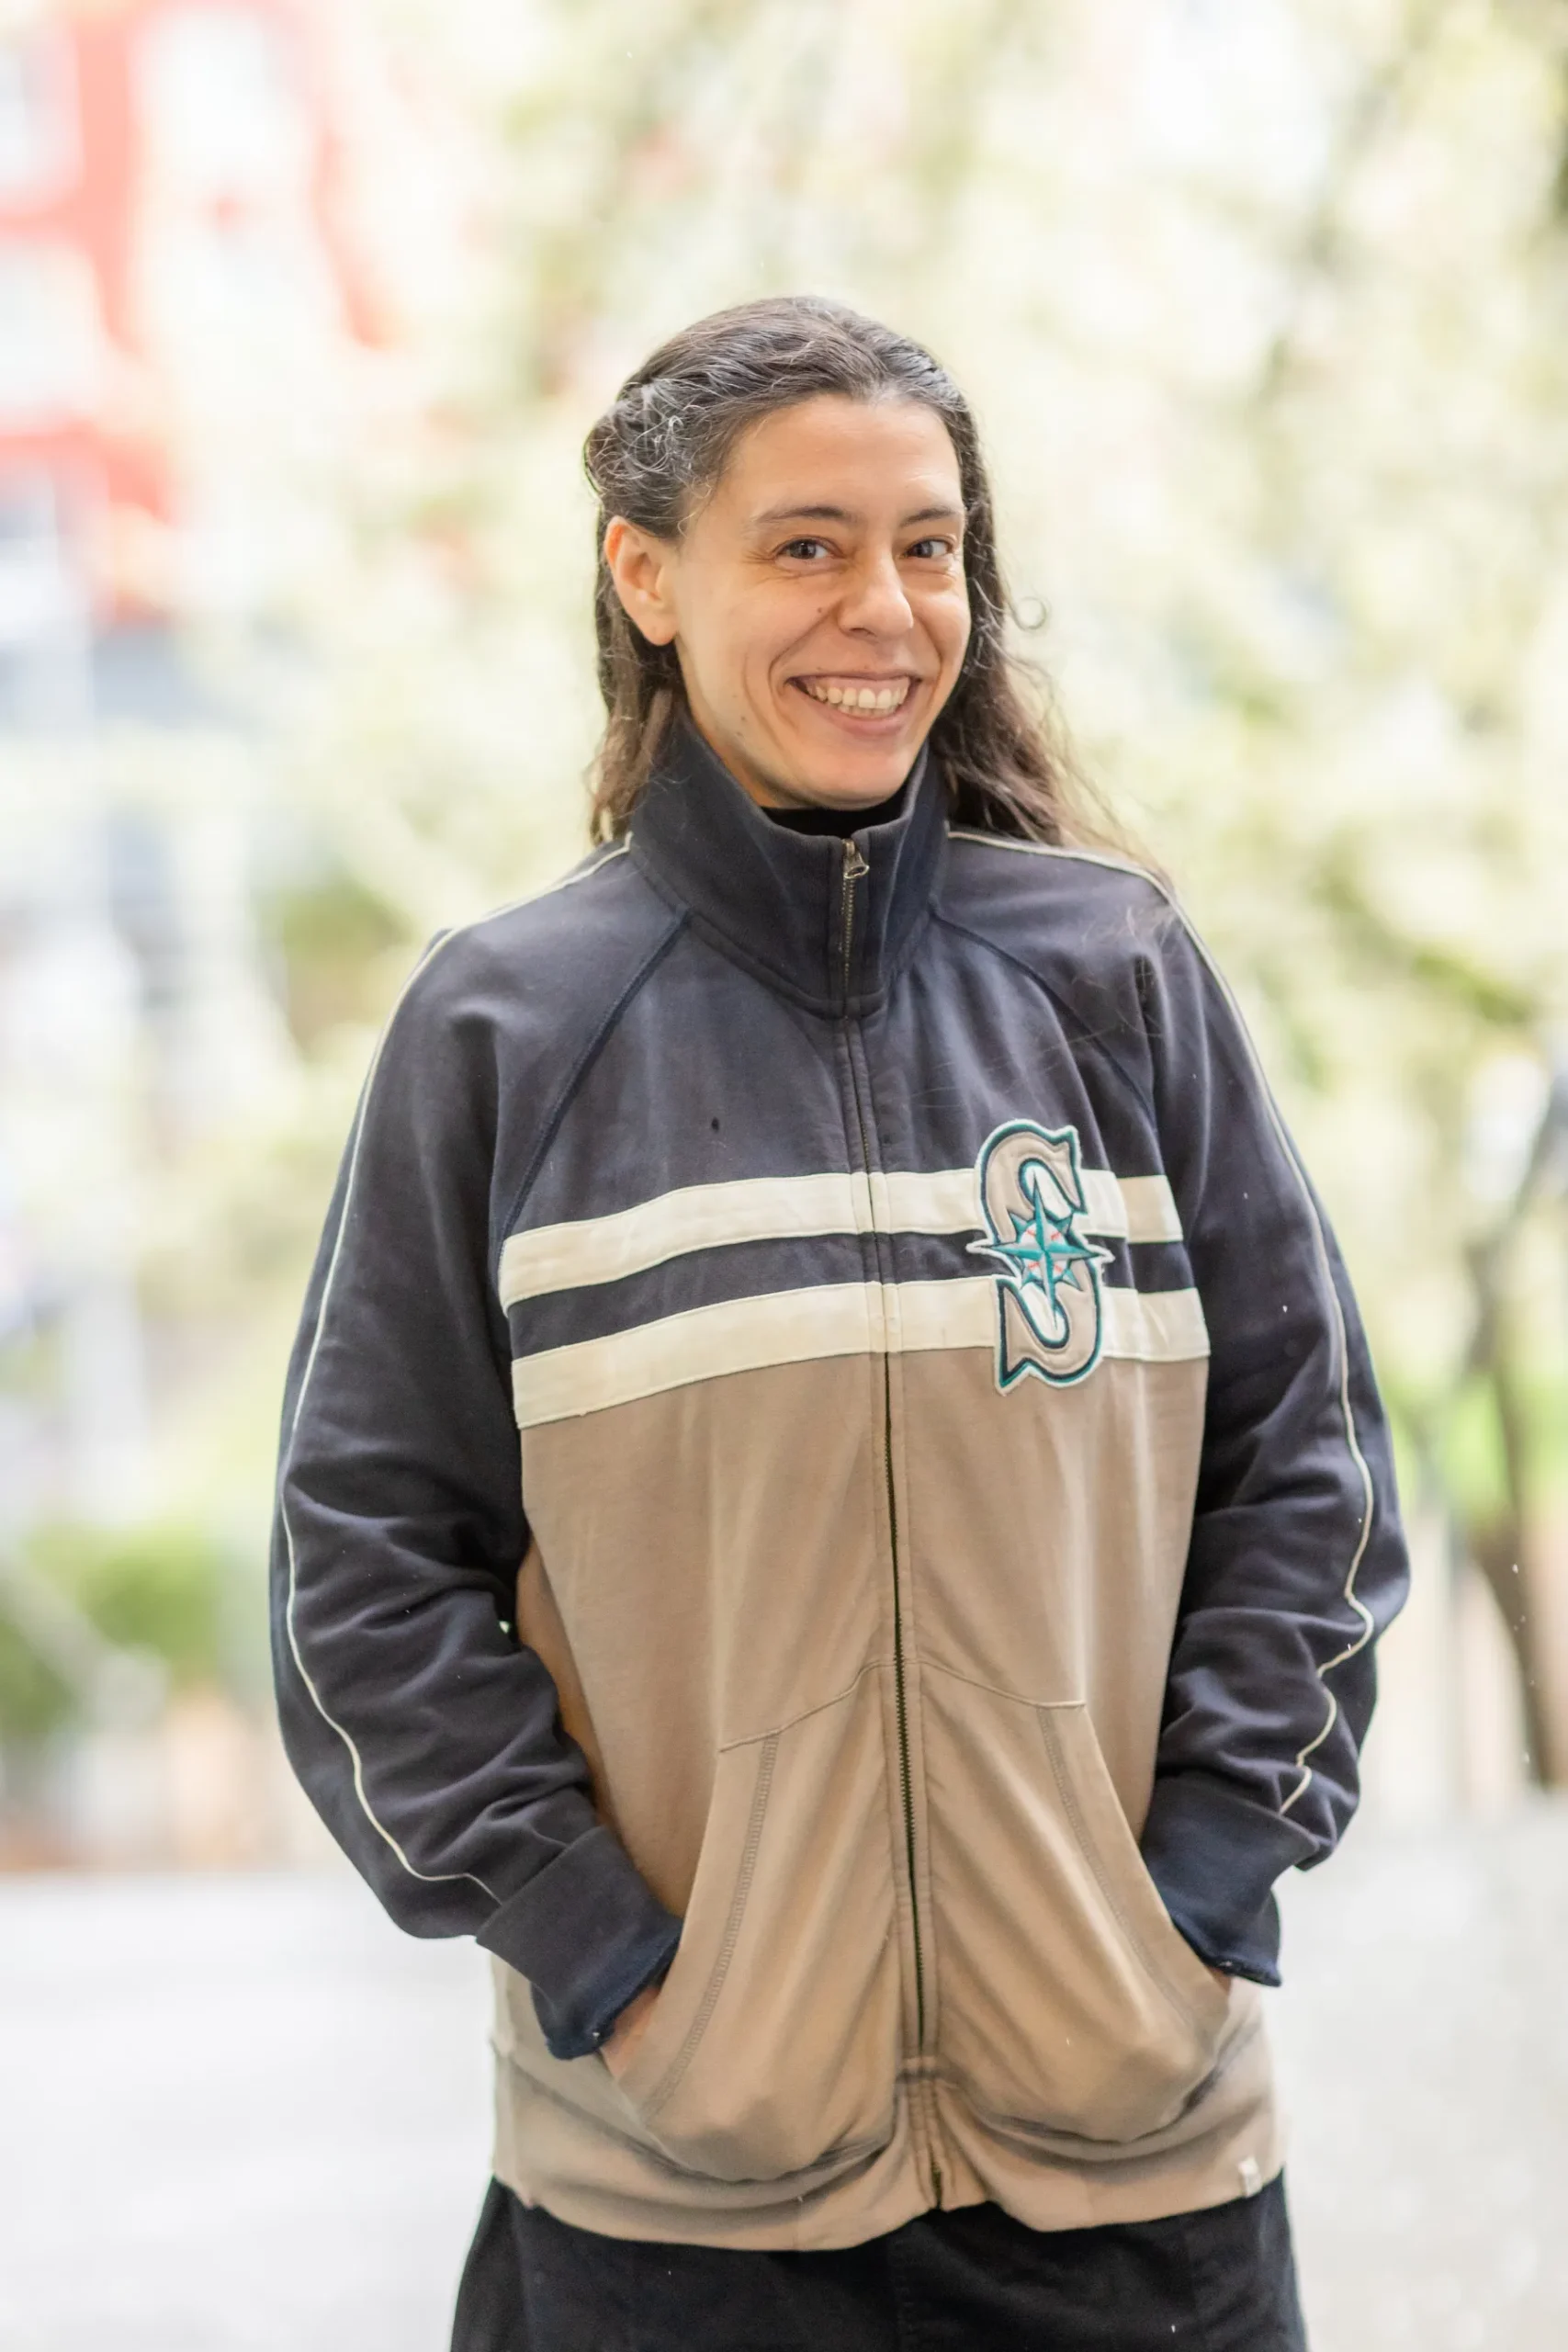 Featured image for “Seattle City Council Position 8 Candidate: Saunatina Sanchez”